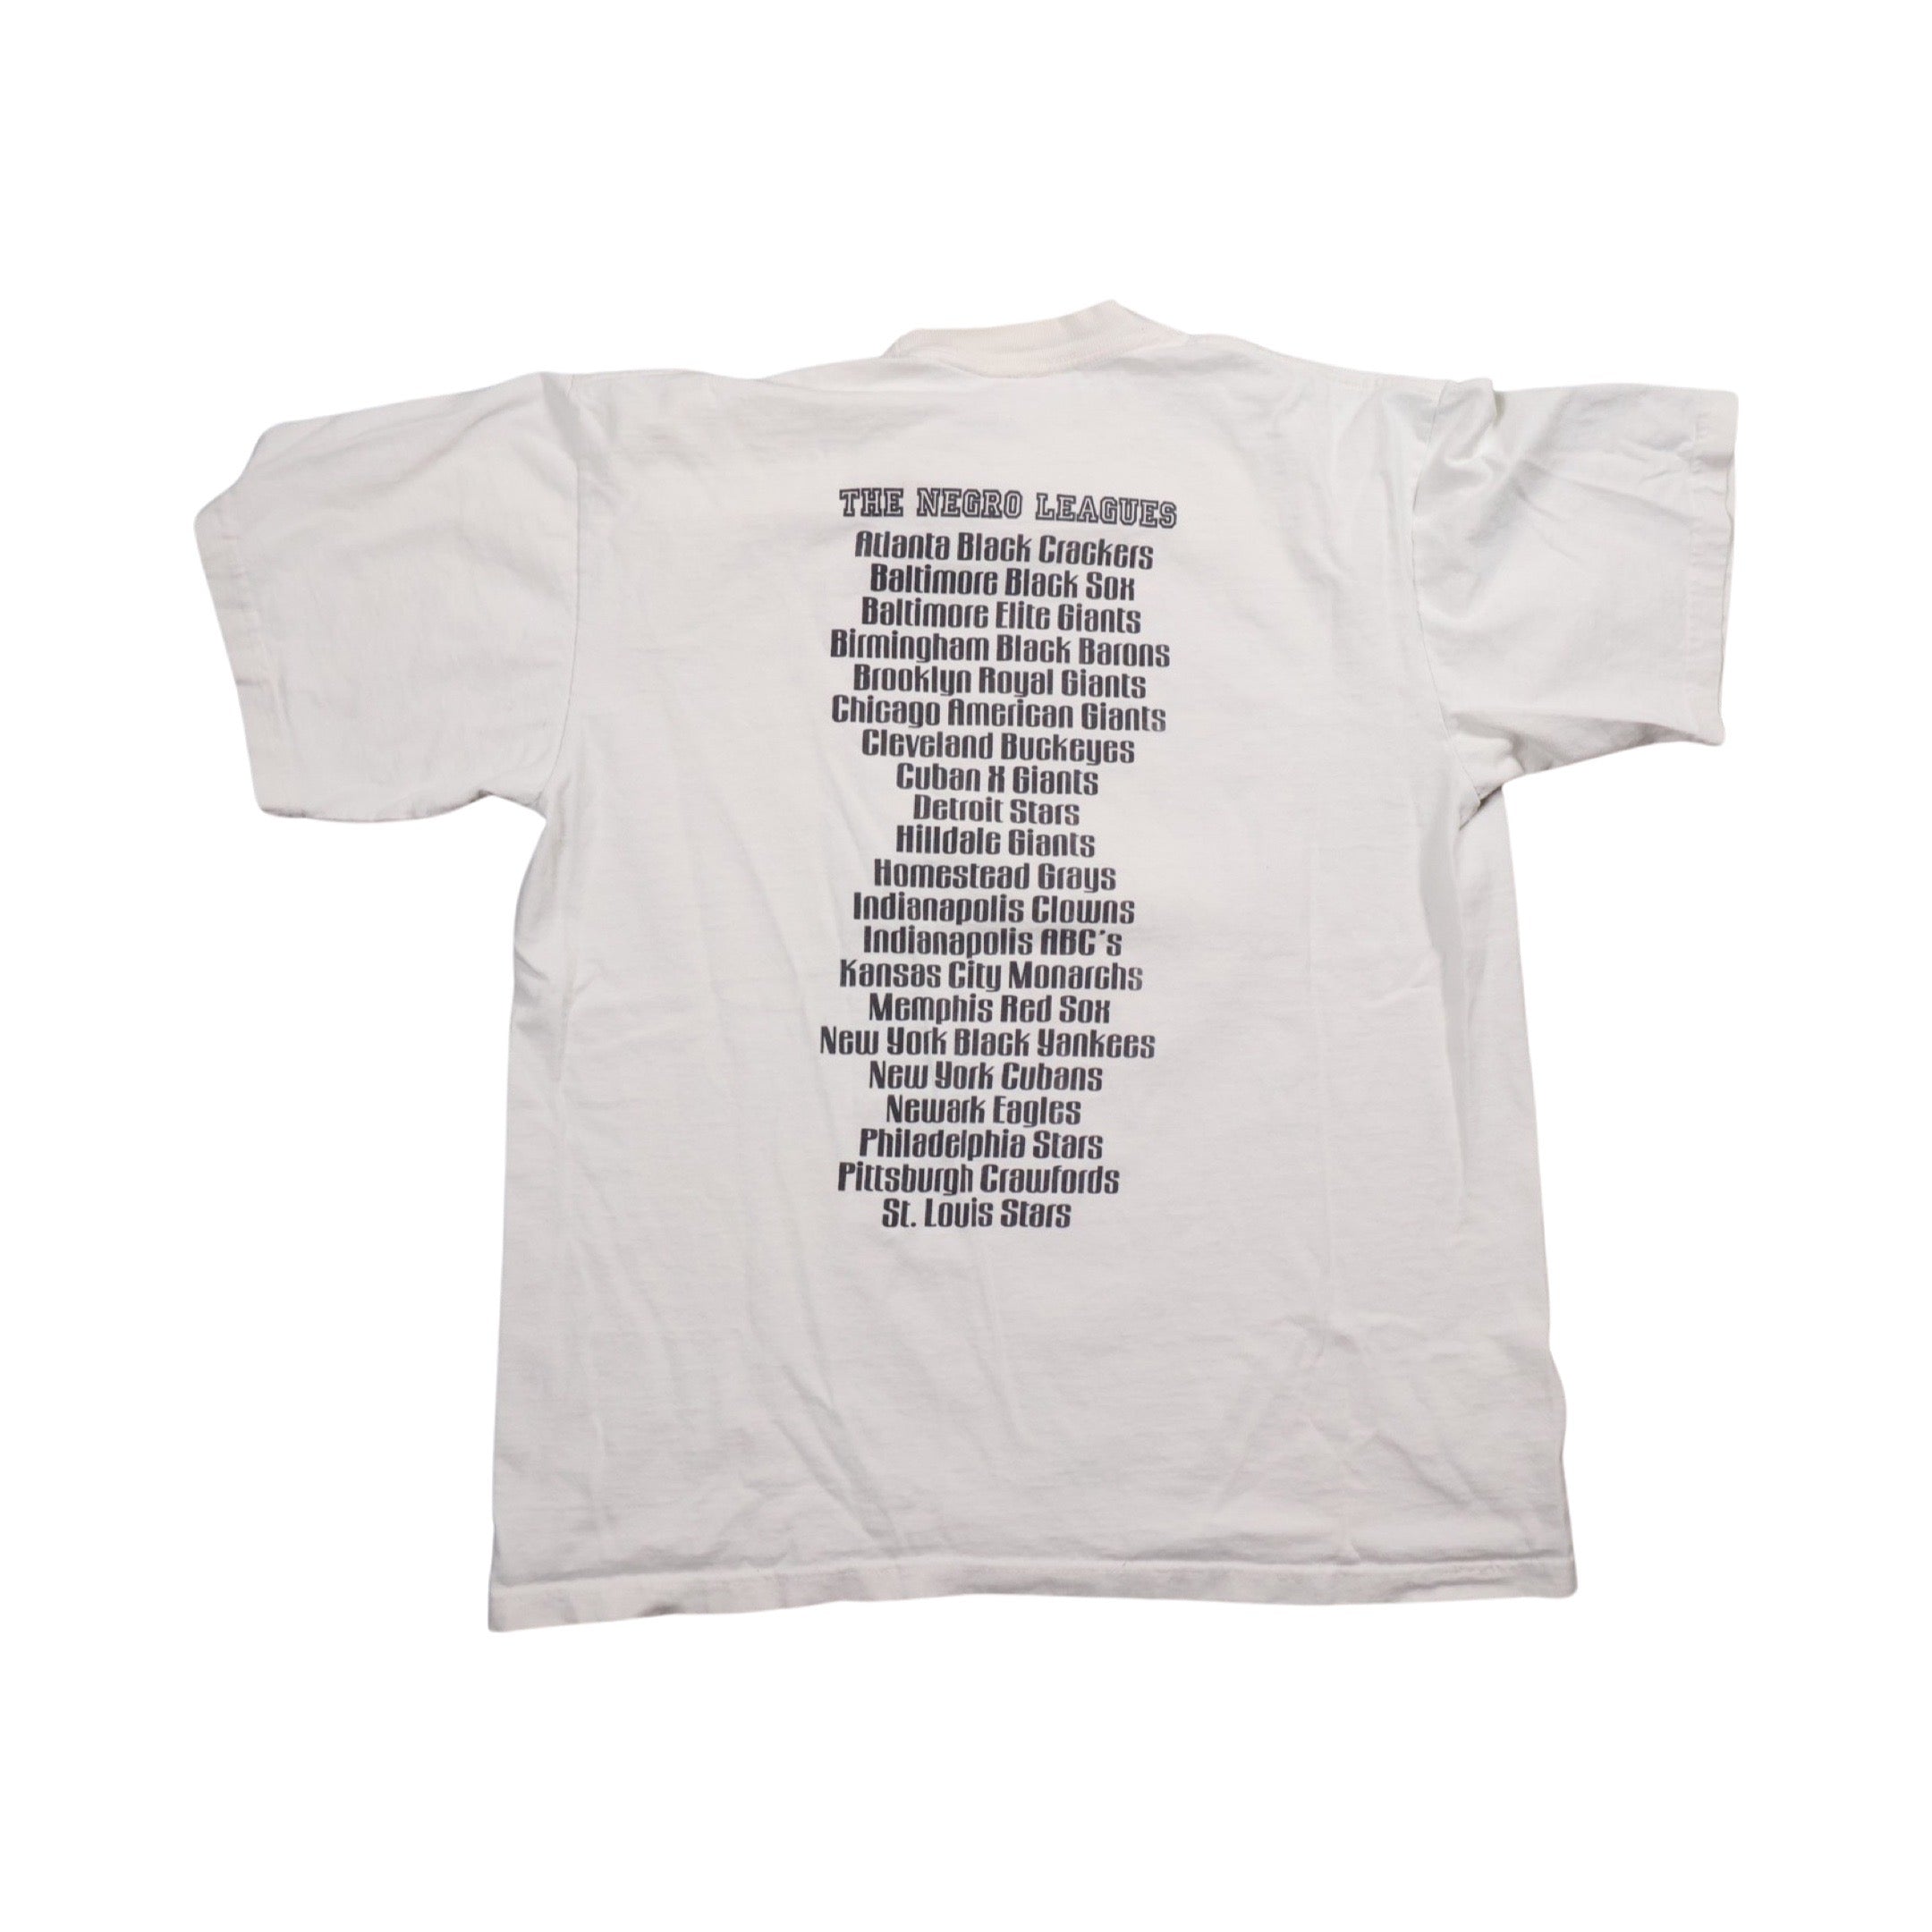 The Negro Leagues 90s T-Shirt (XL)